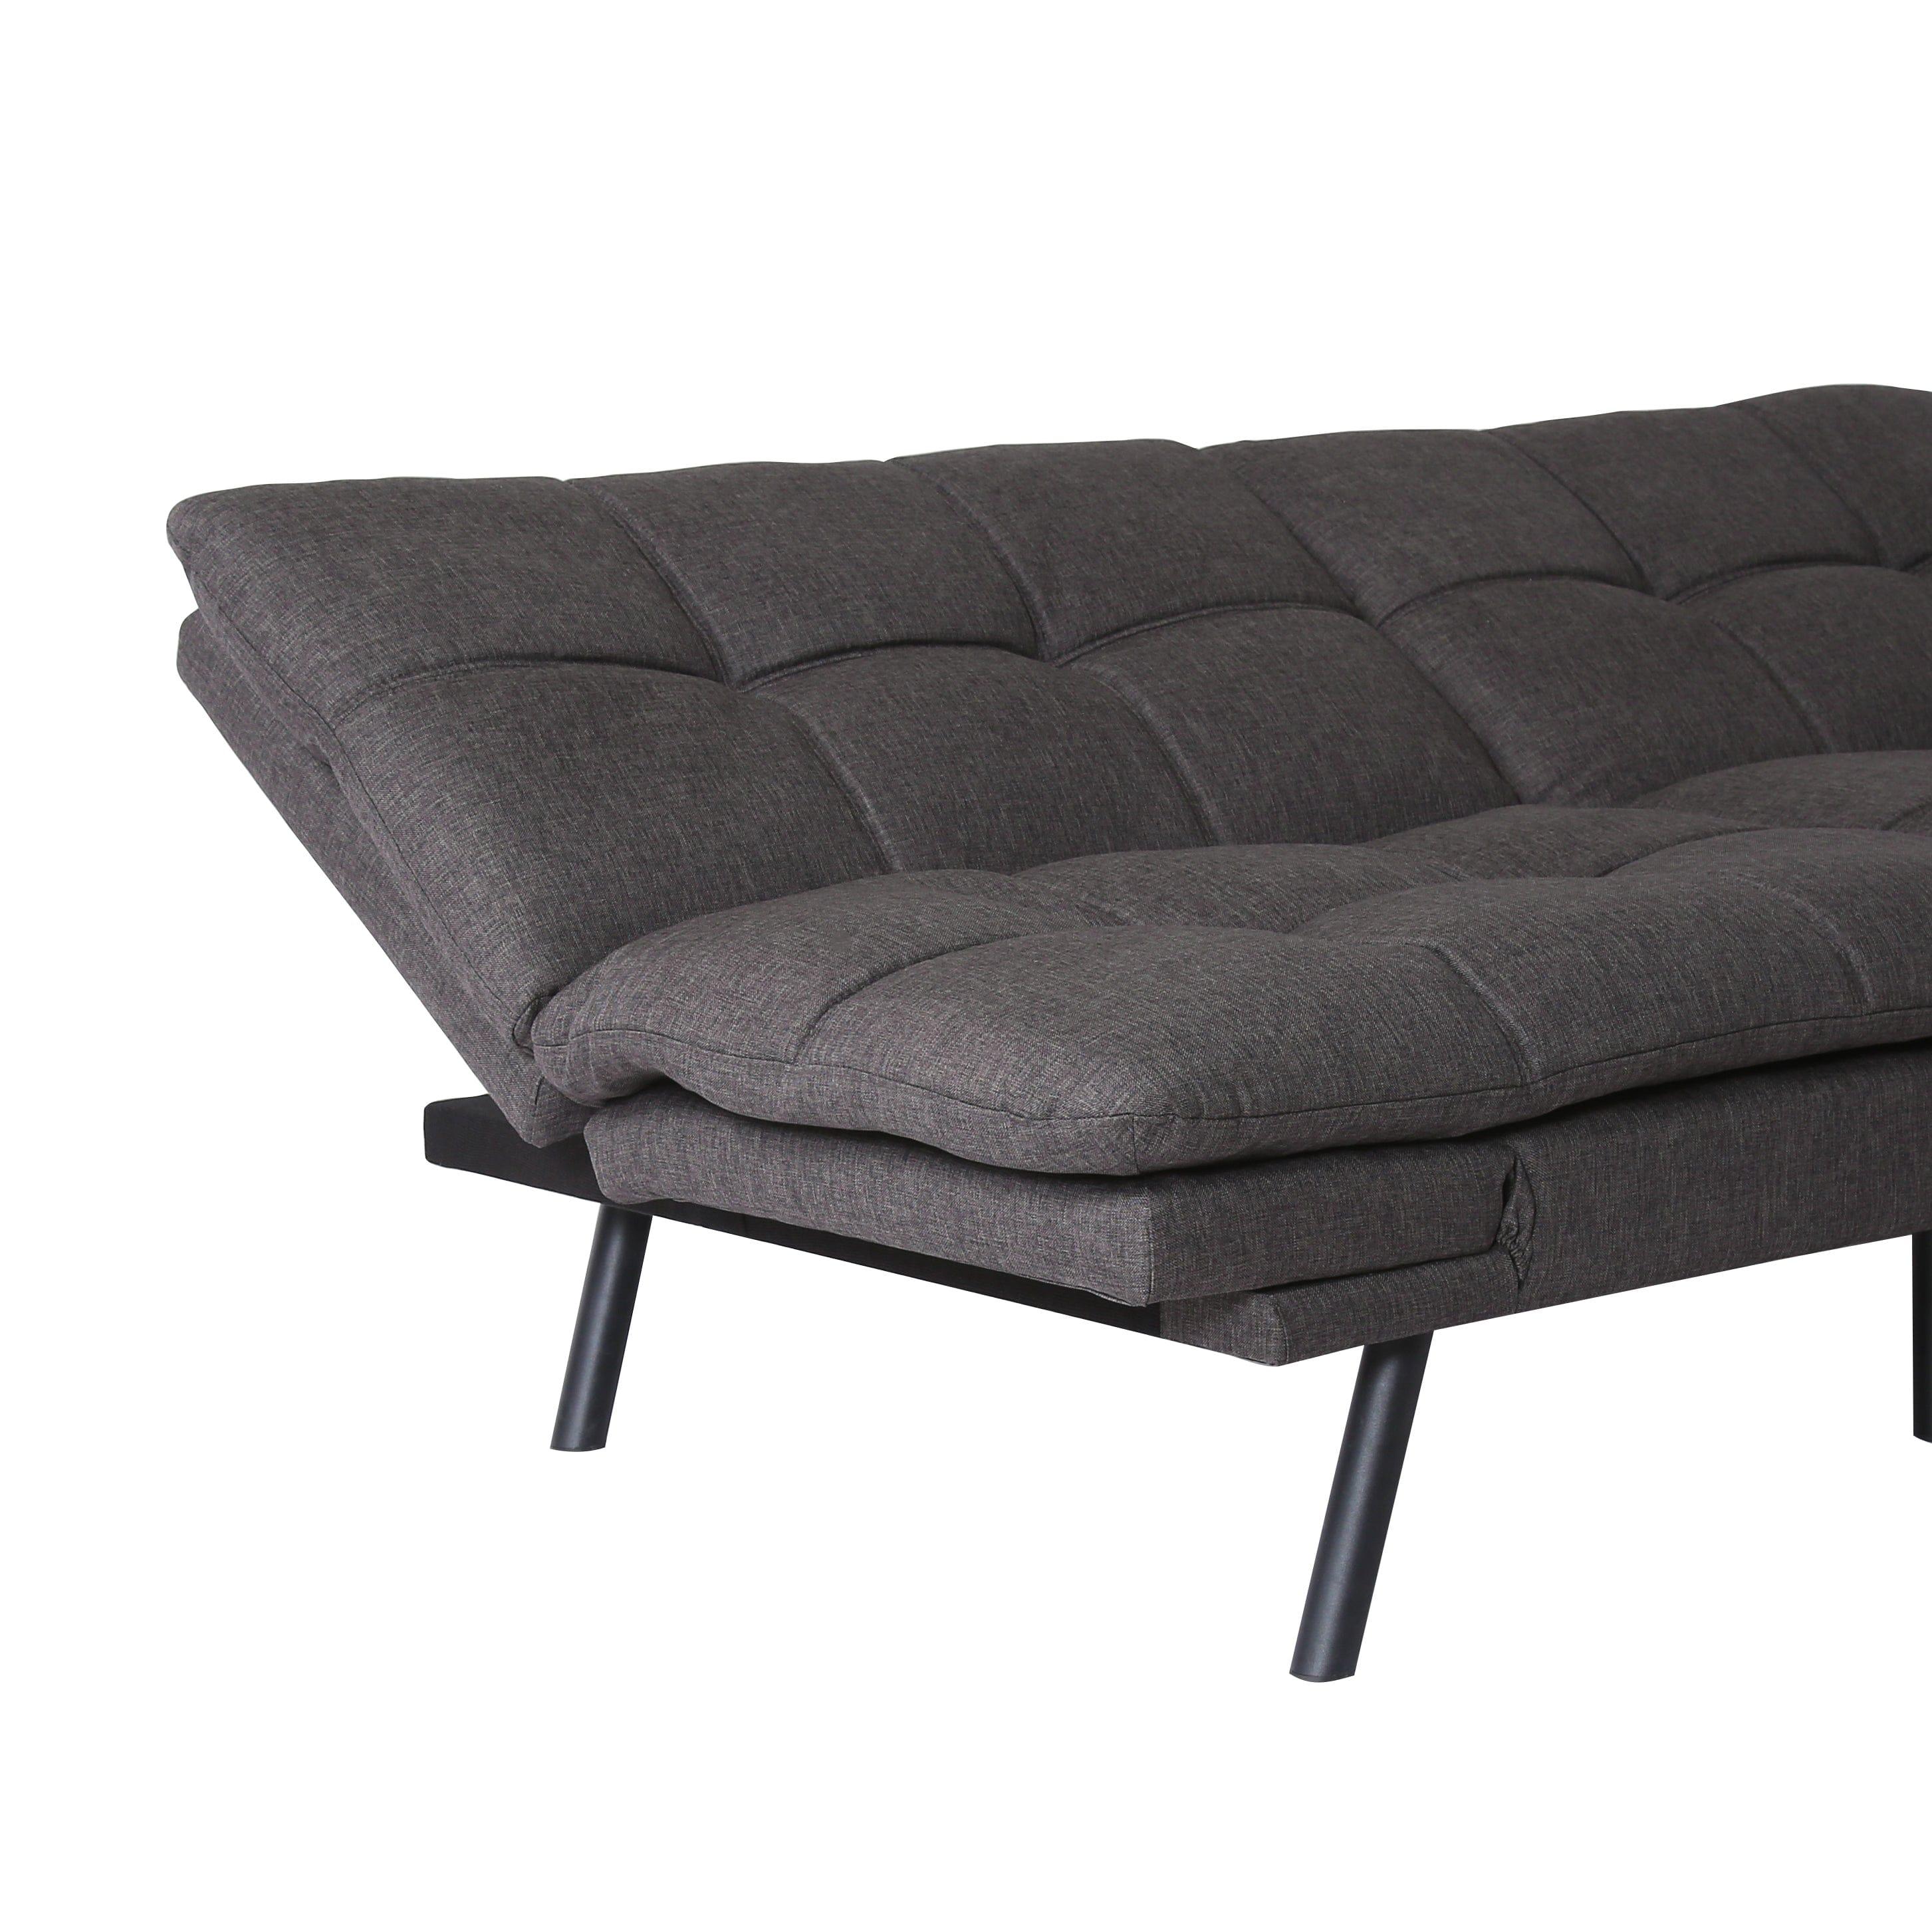 Shop Lapland Convertible Memory Foam Futon Couch Sofa Bed Mademoiselle Home Decor